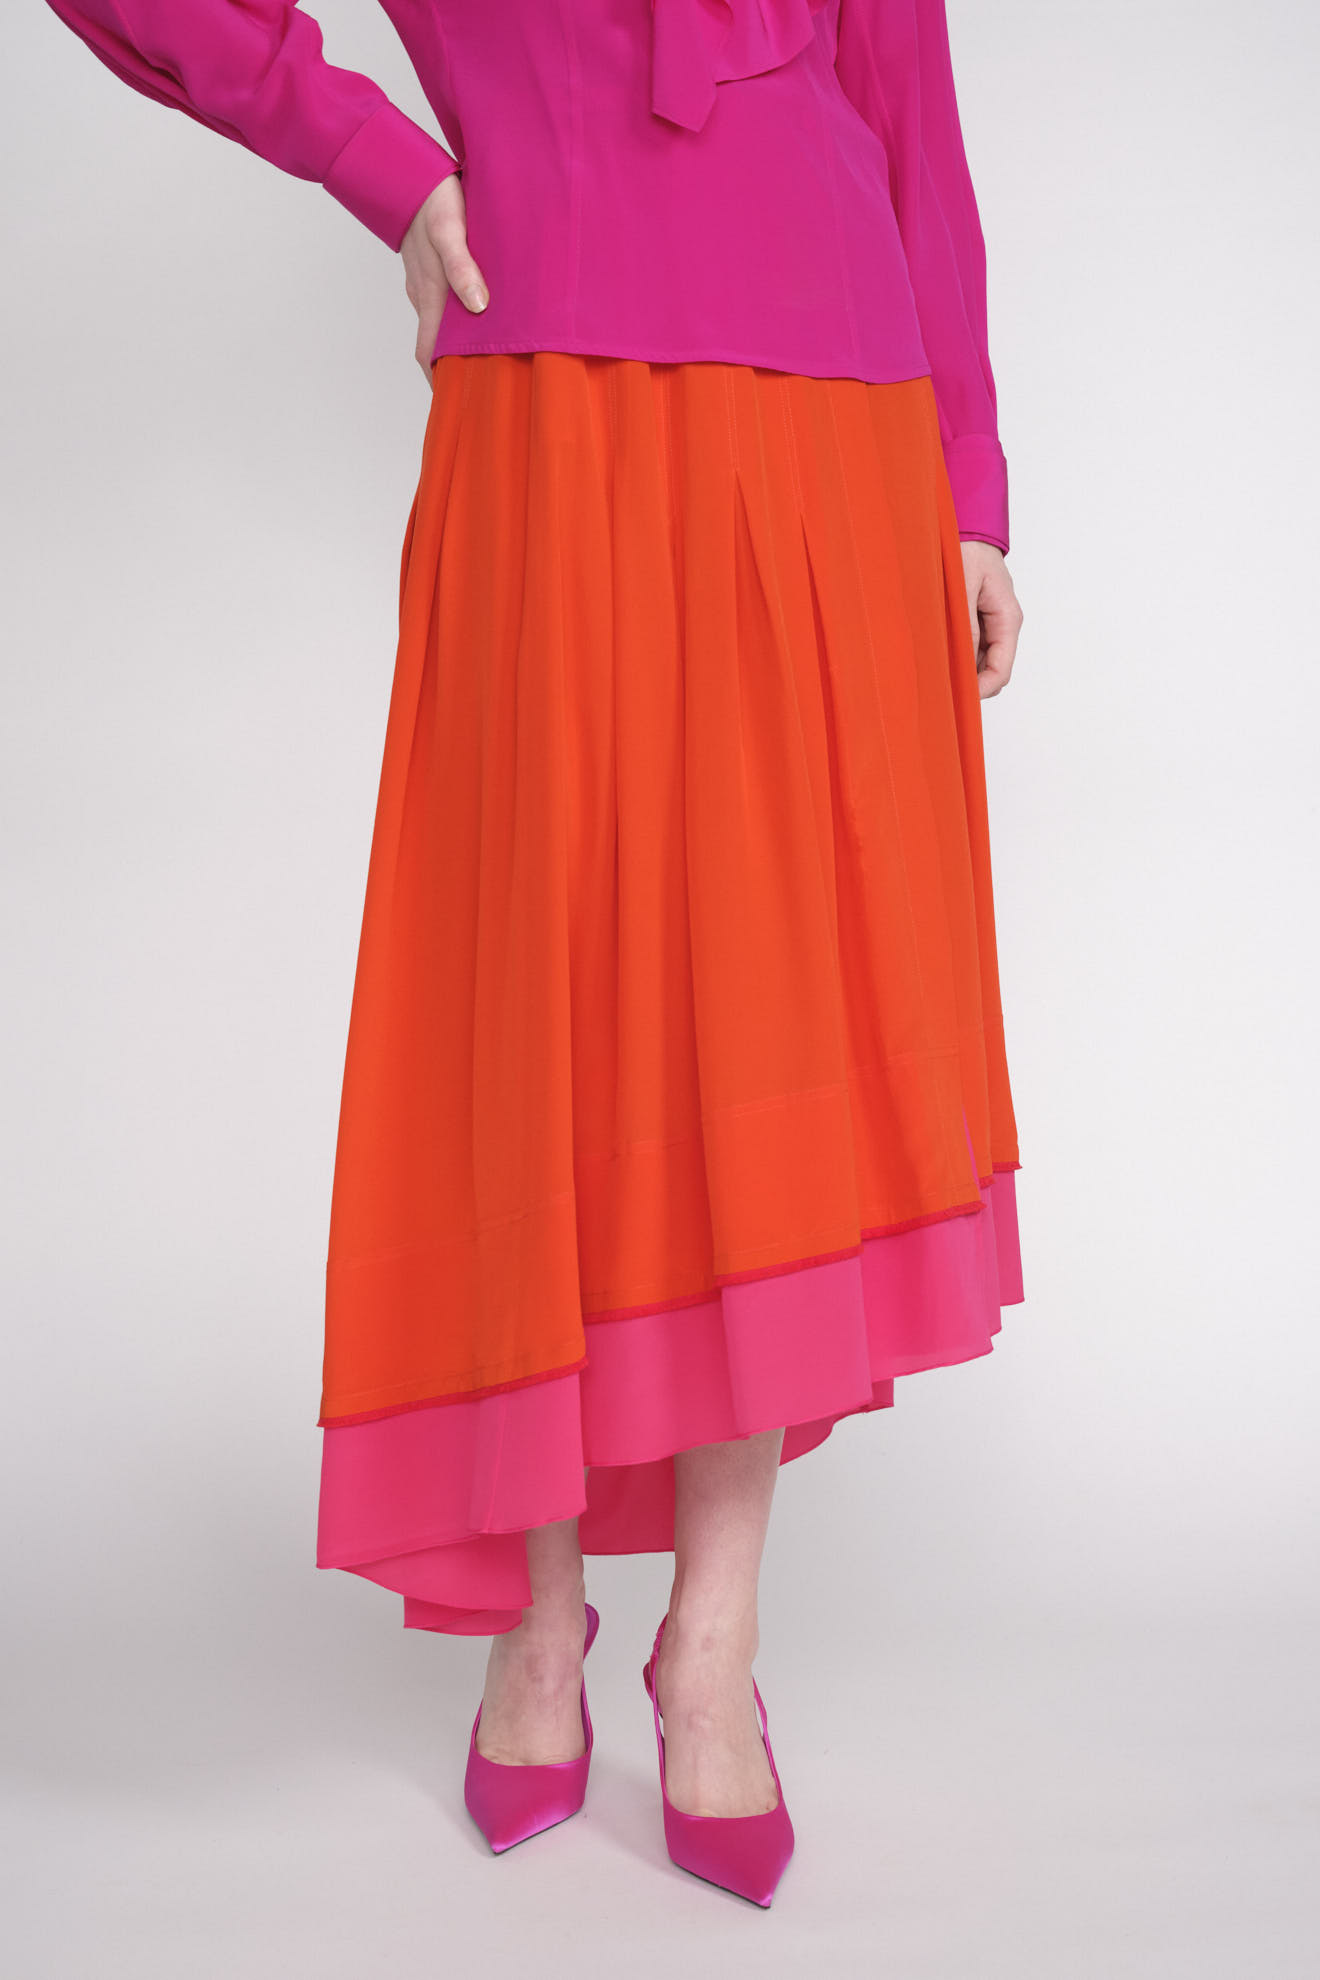 Antonia Zander Gaby - silk midi skirt with slit details orange M